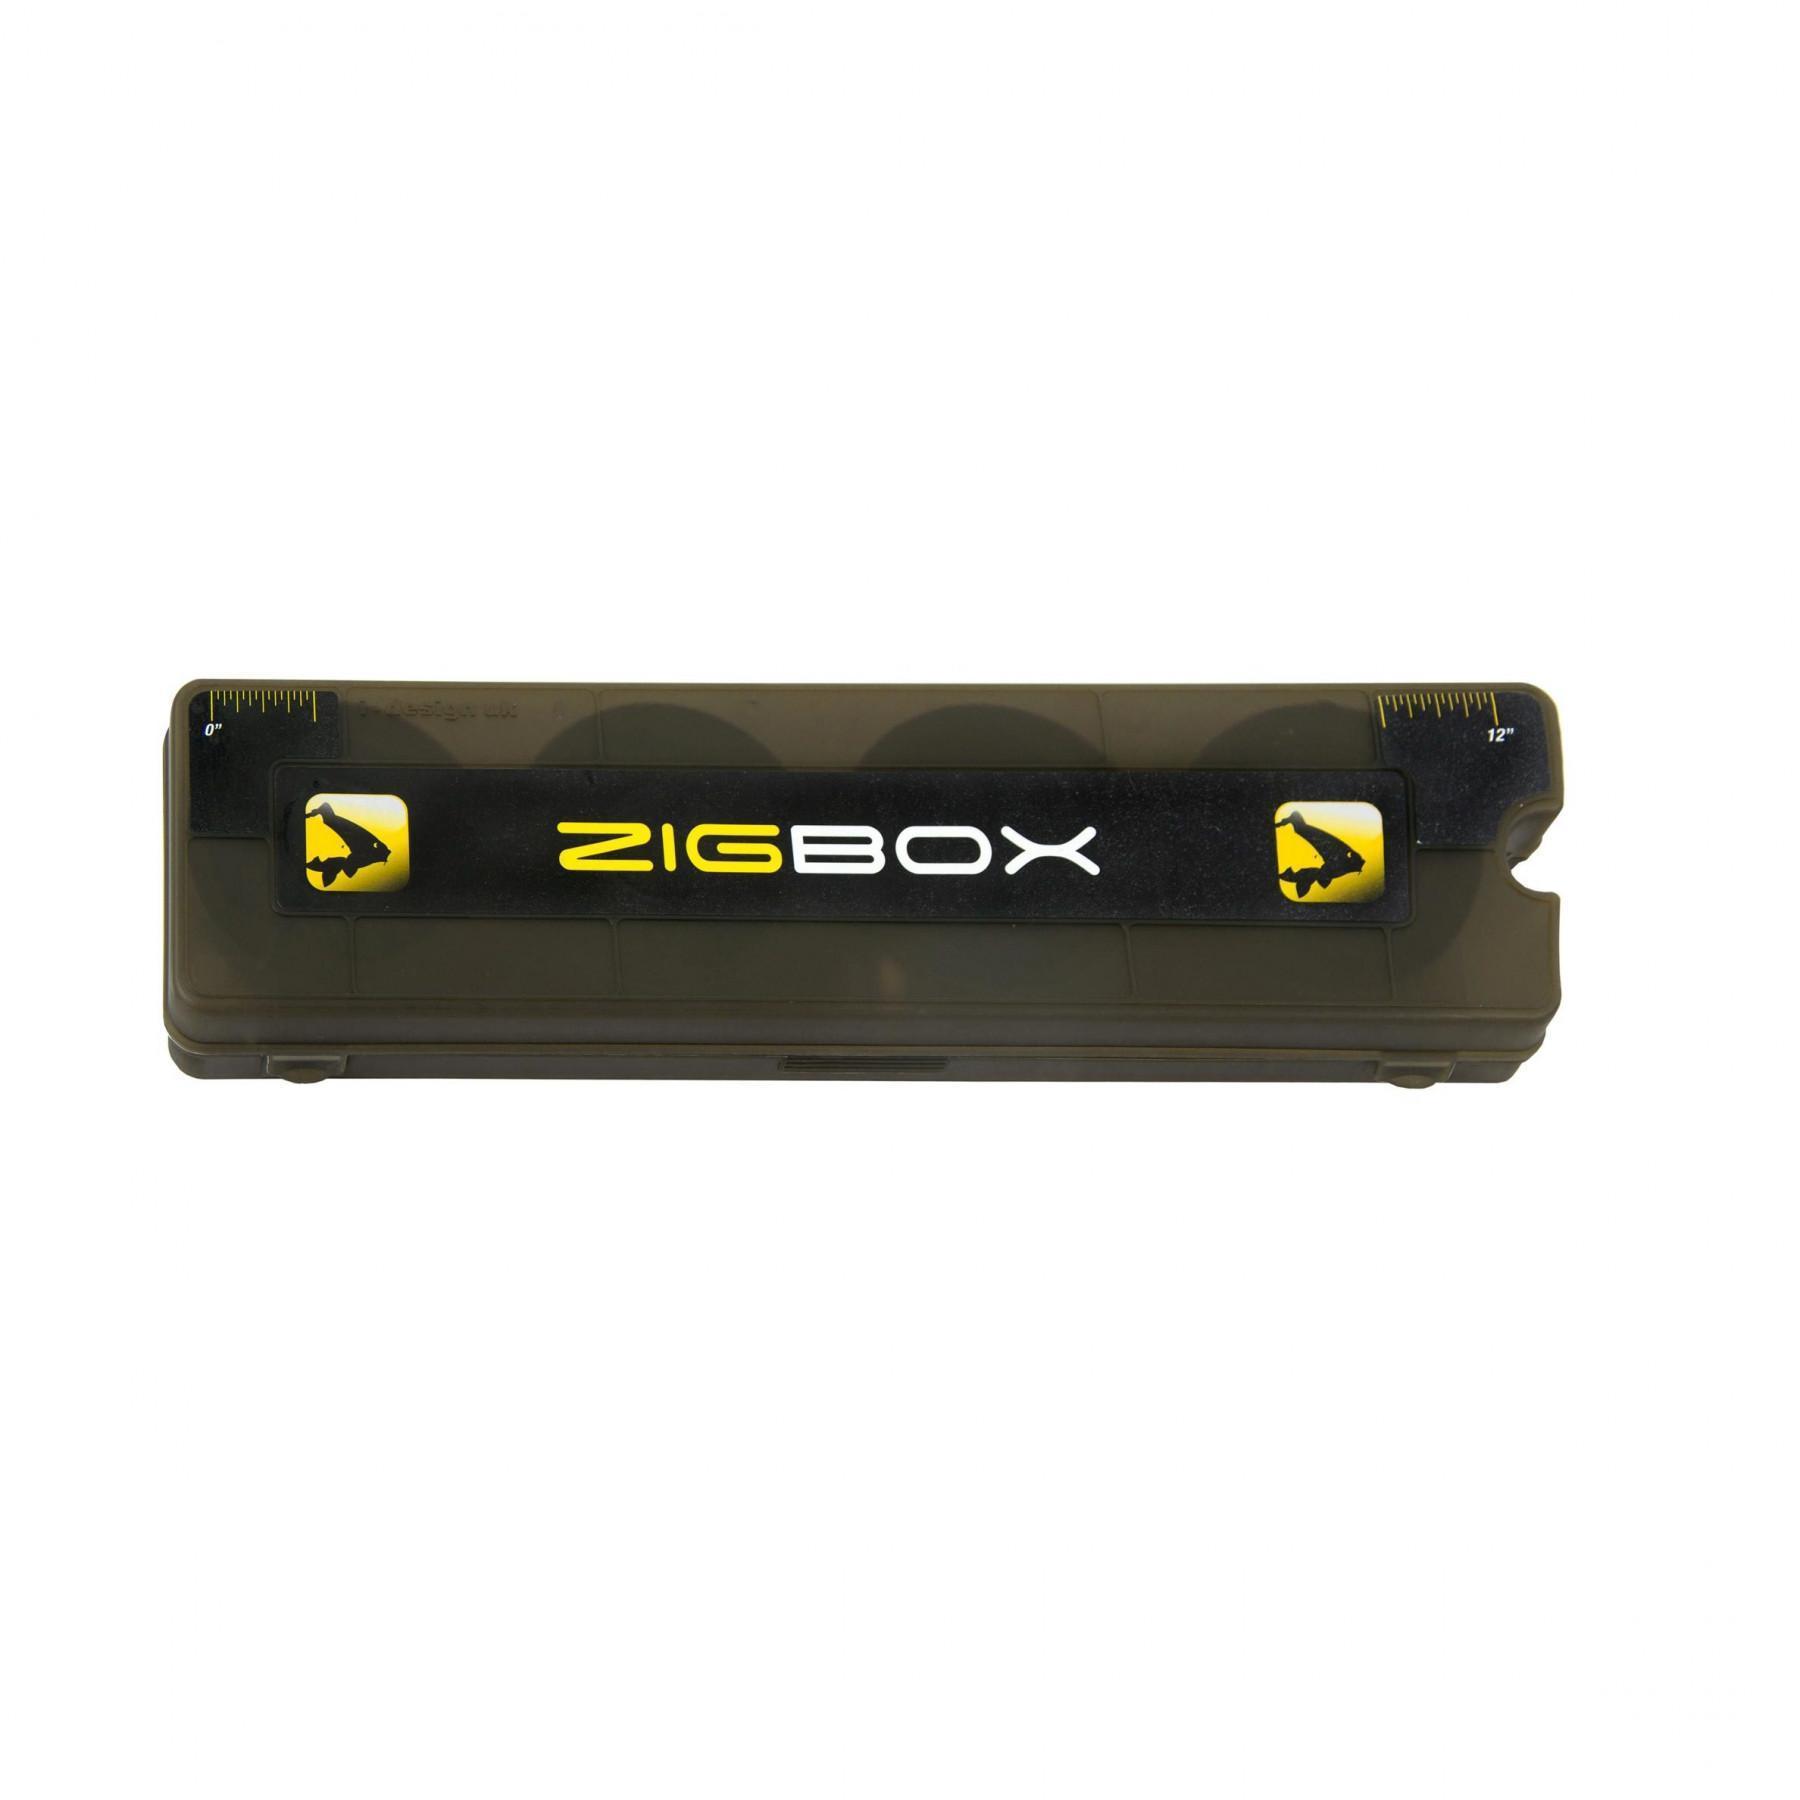 Zig-Box Avid Carp